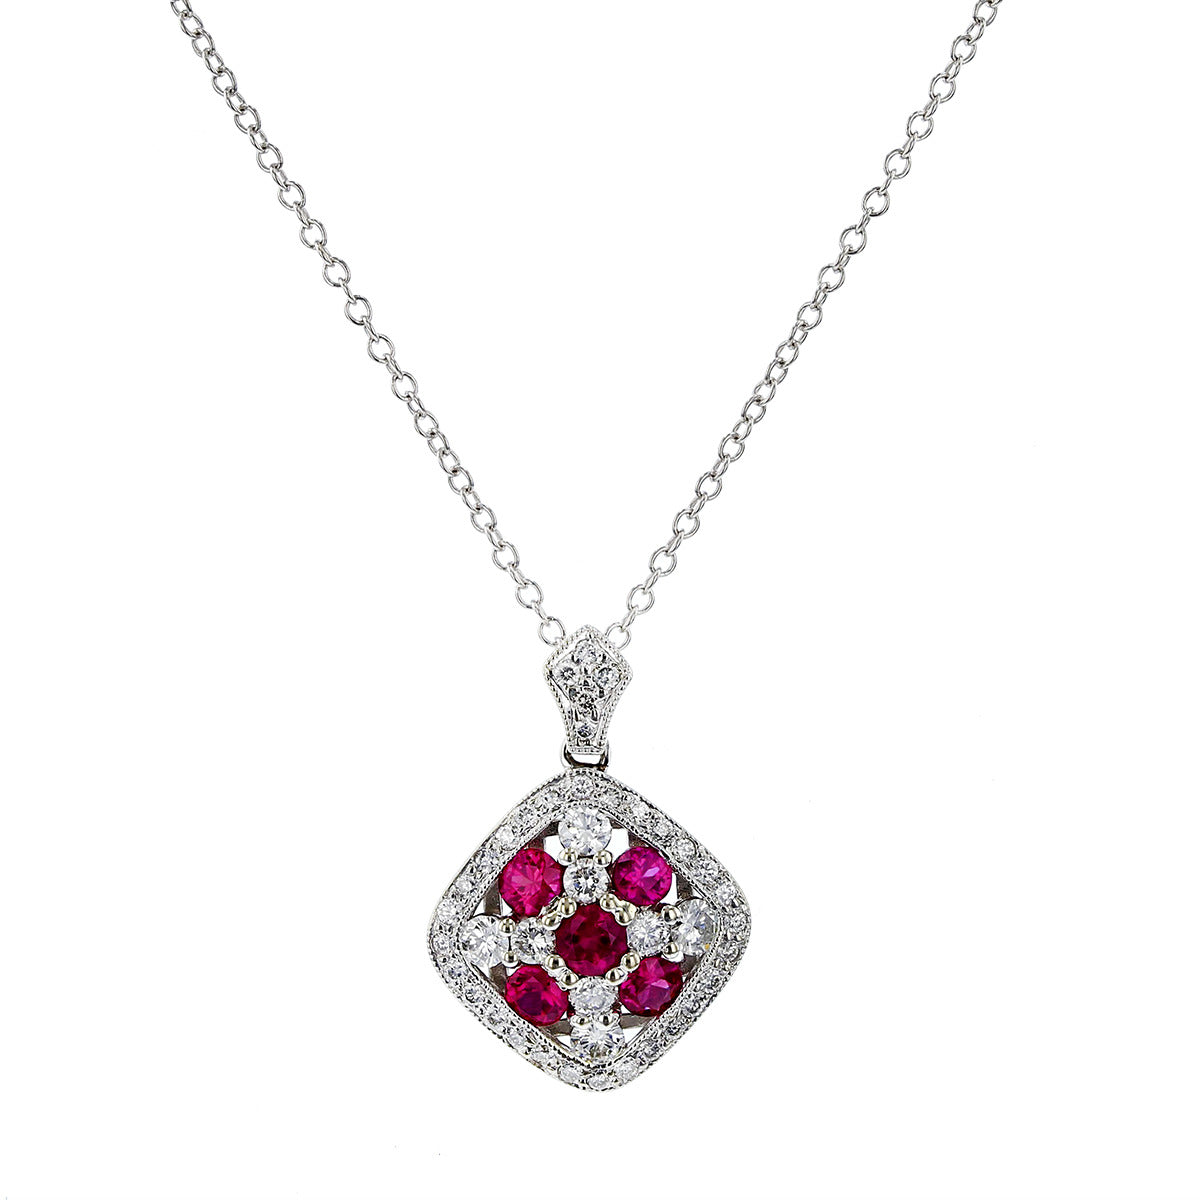 14K White Gold Ruby and Diamond Pendant Necklace | Shreve & Co.